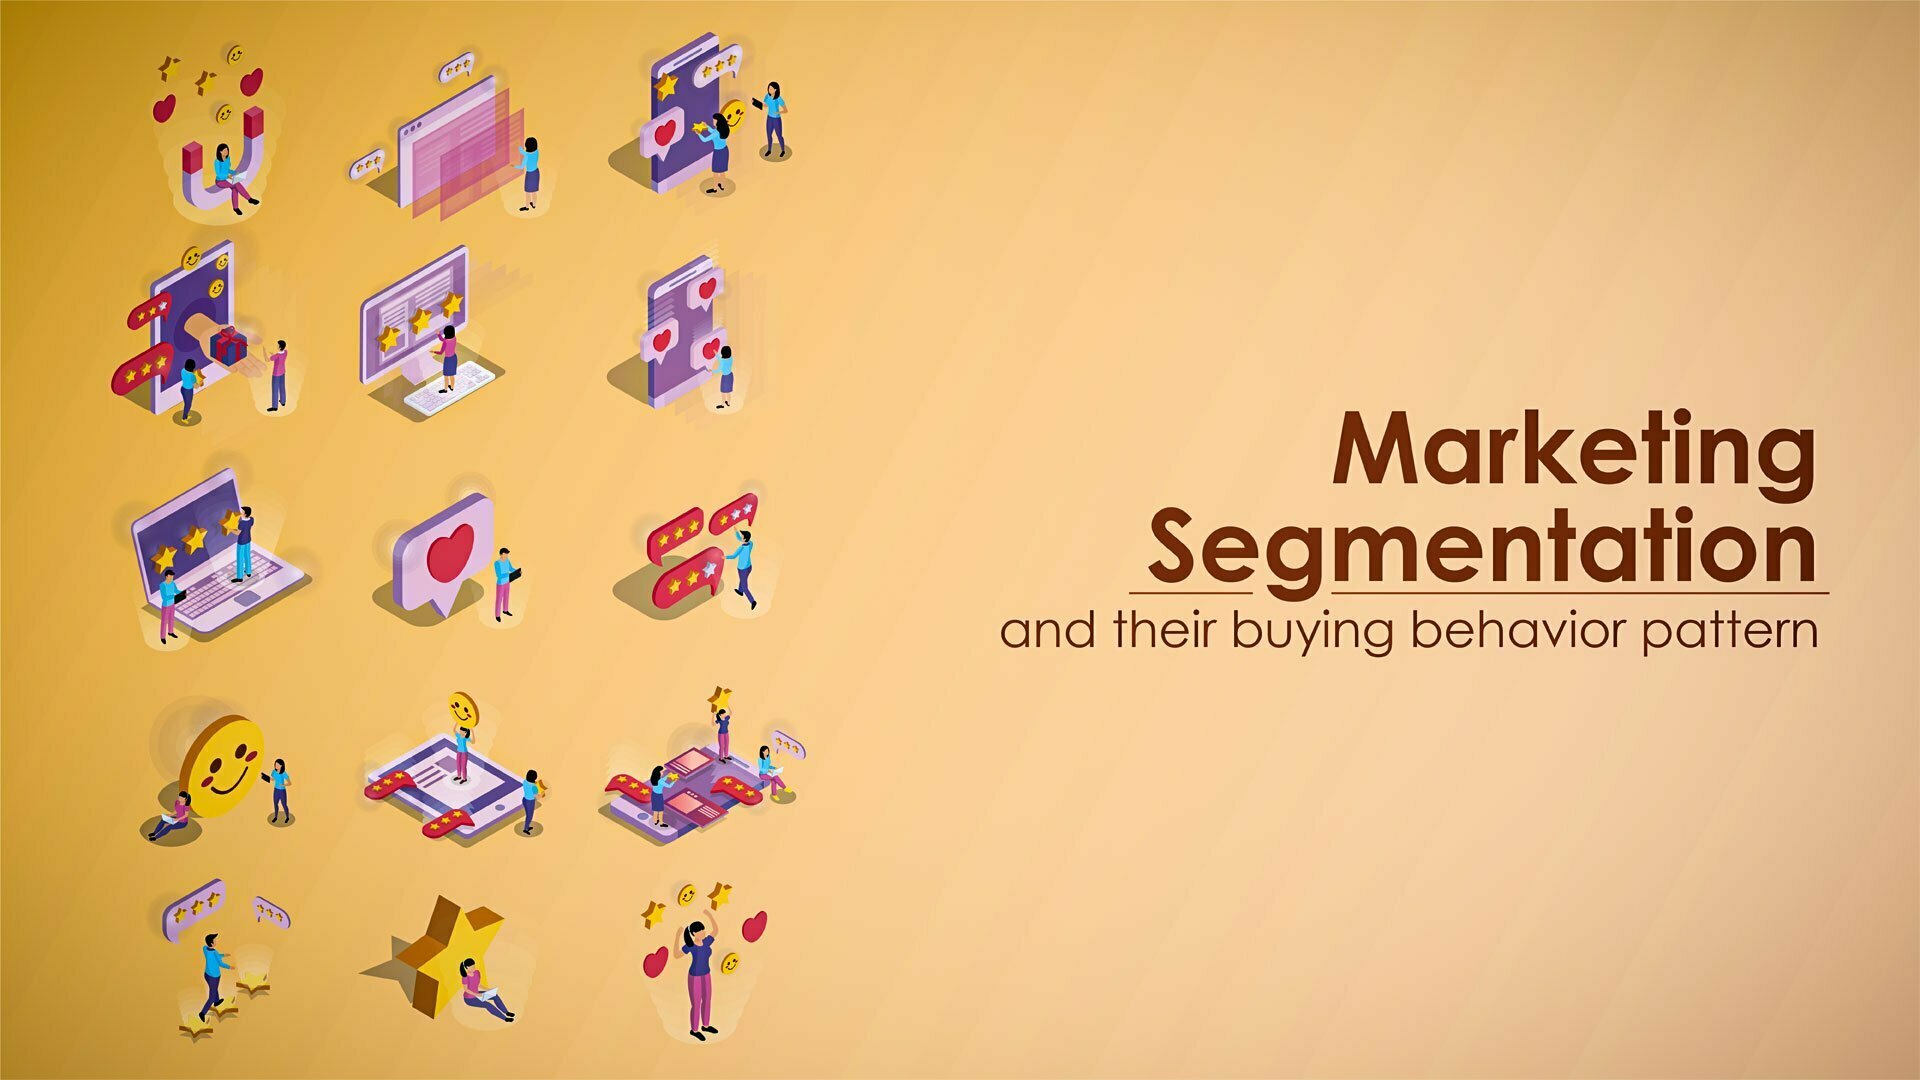 Market segmentation and their buying behavior pattern